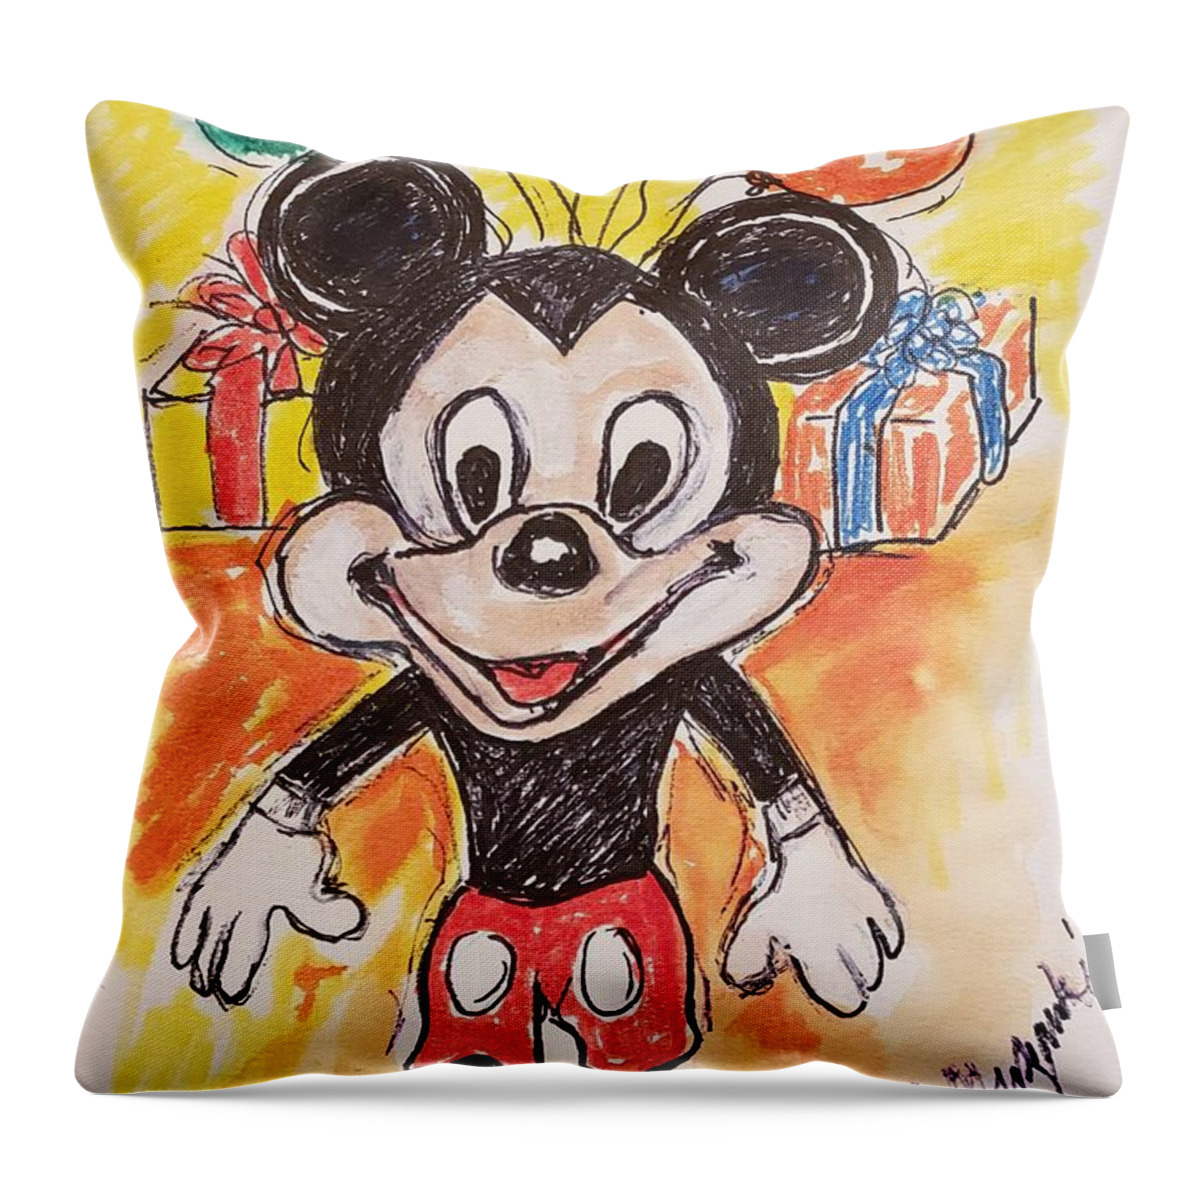 Mickey Mouse Throw Pillow featuring the mixed media Mickey Mouse 90th Birthday Celebration by Geraldine Myszenski